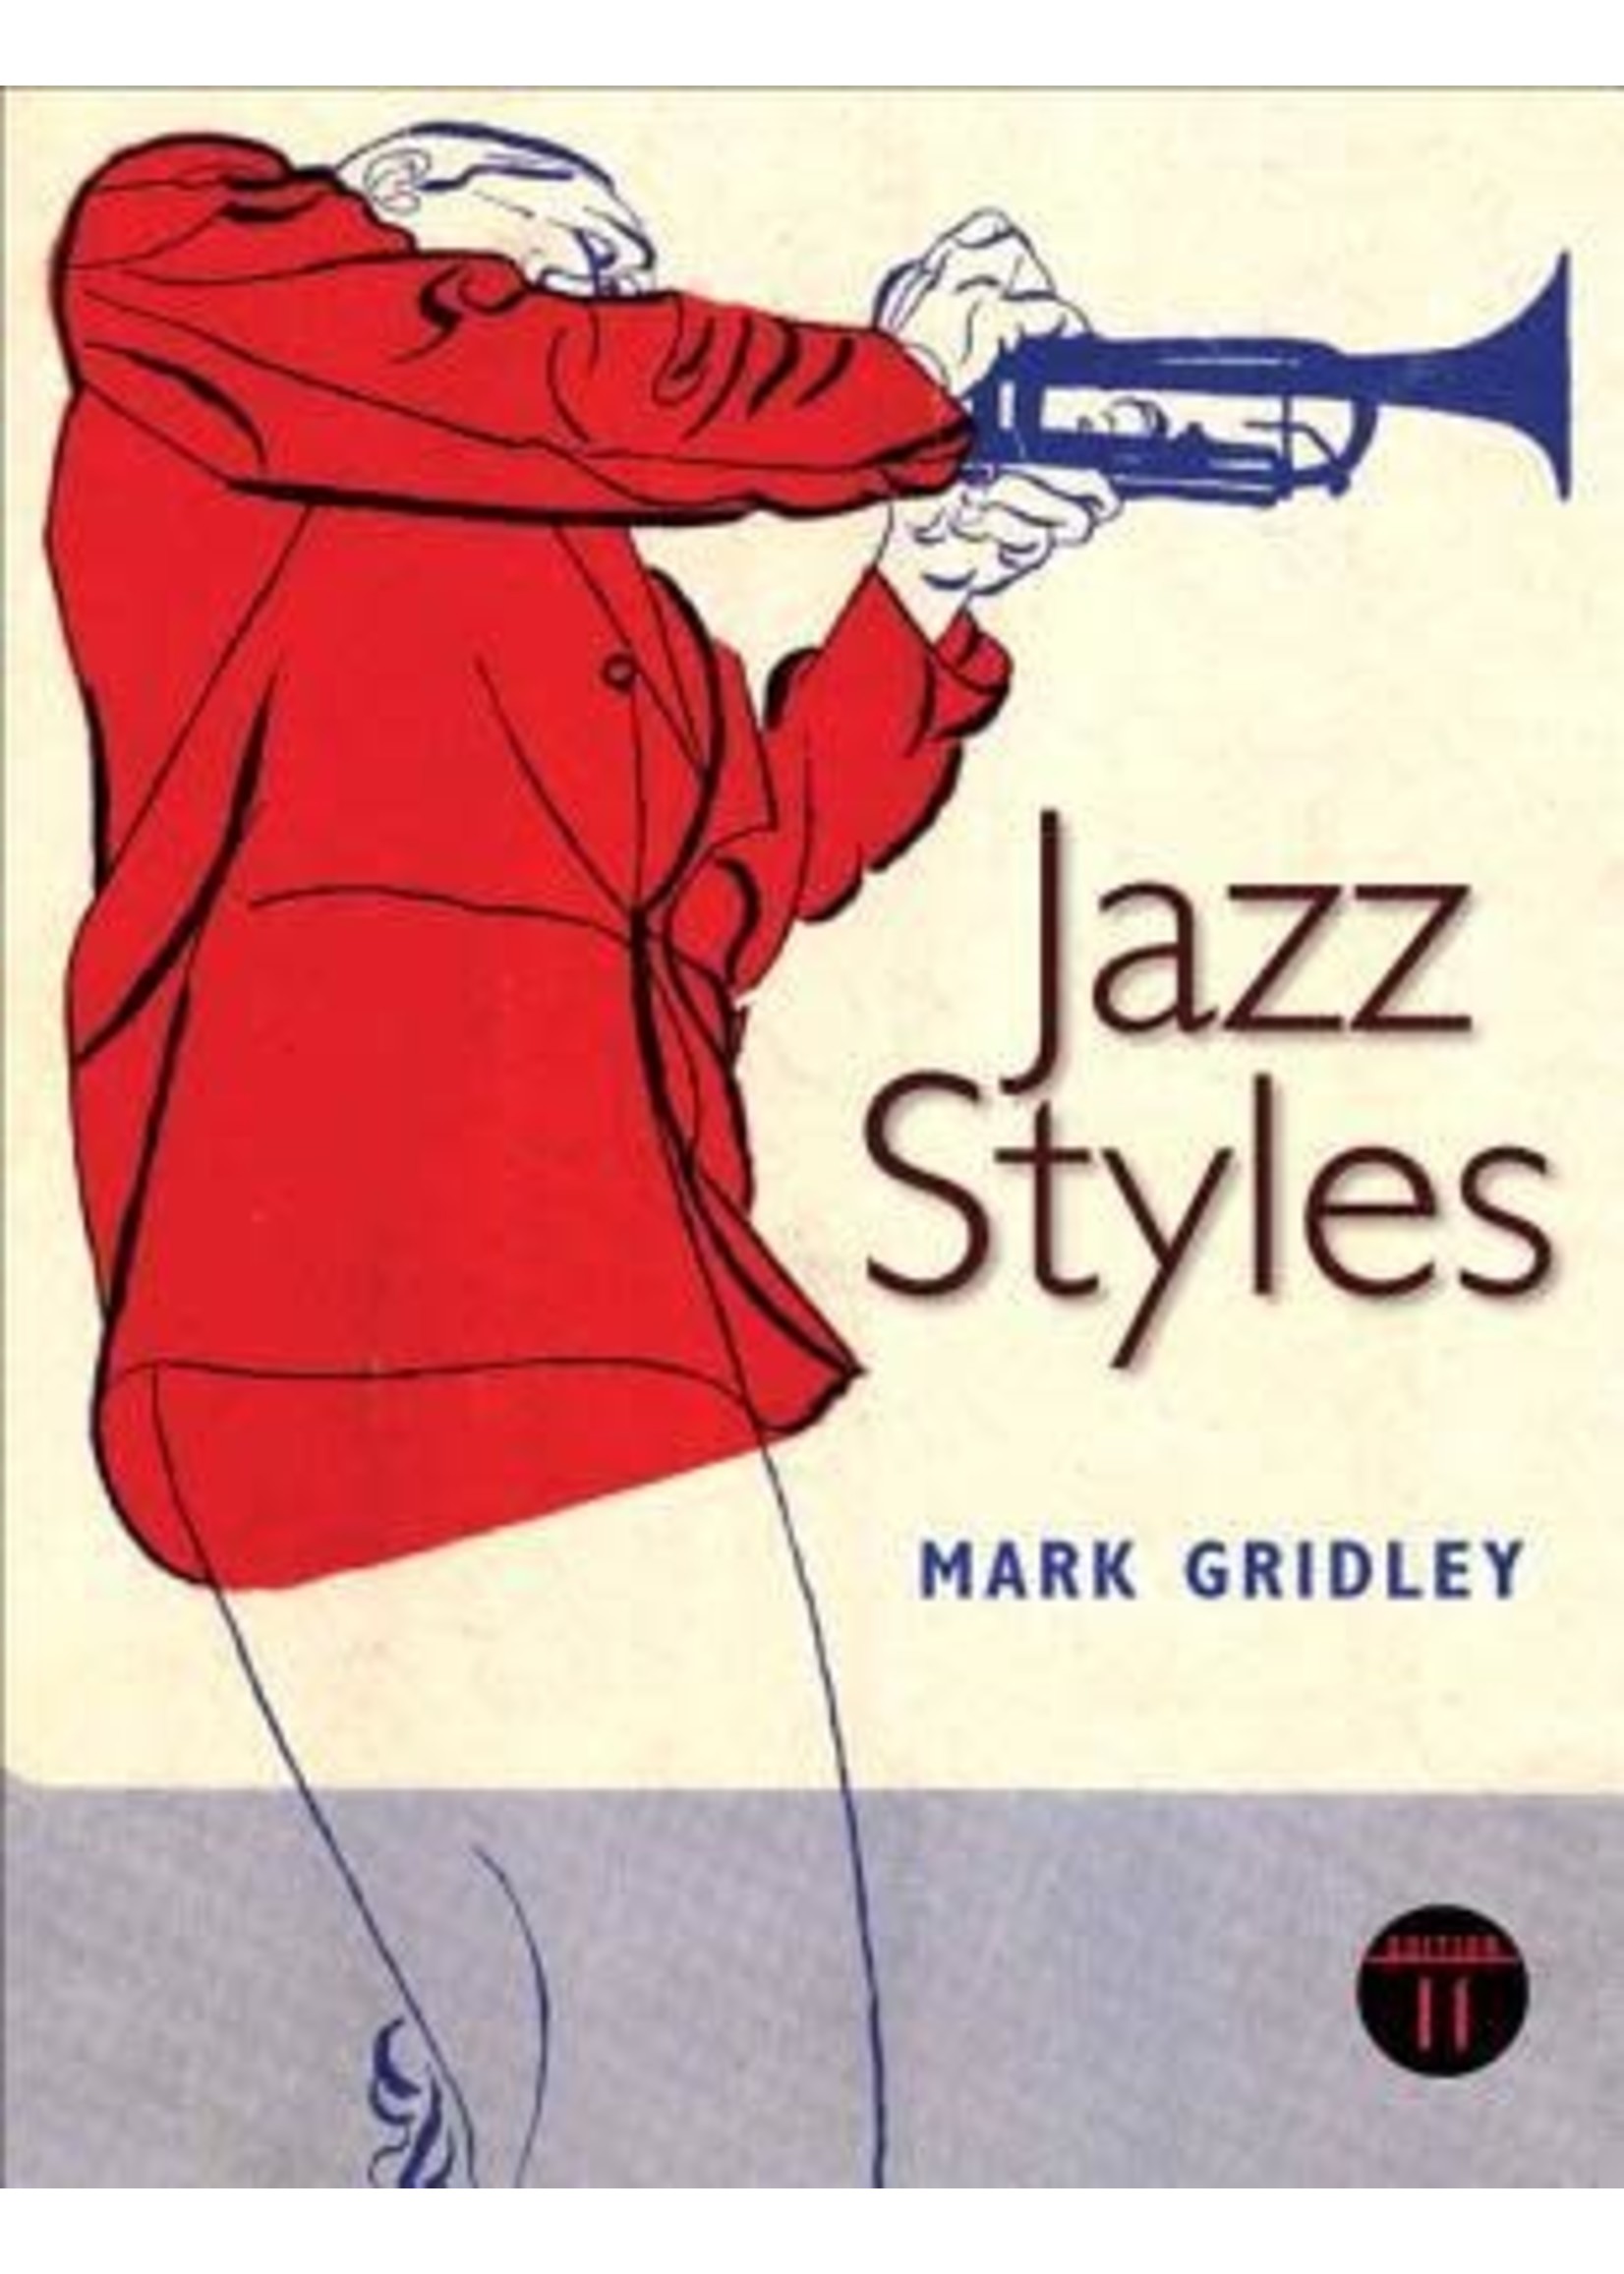 Jazz Styles by Mark C. Gridley